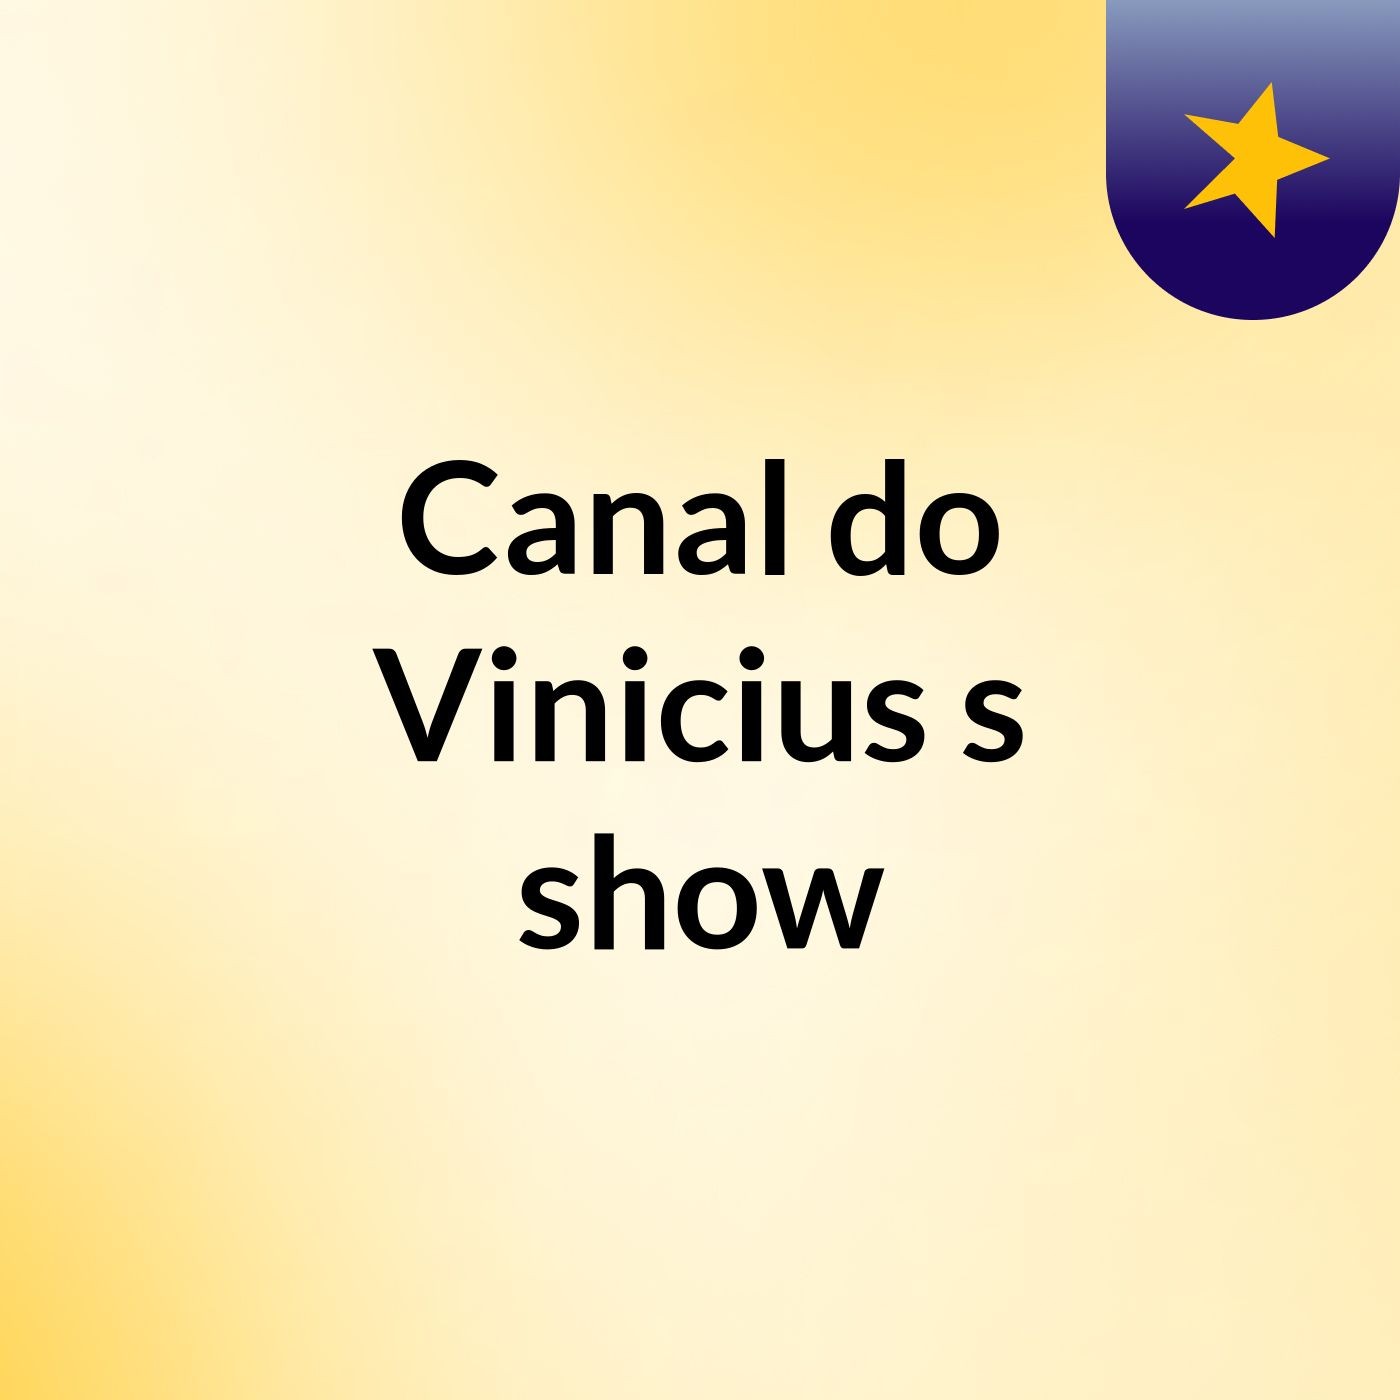 Canal do Vinicius's show